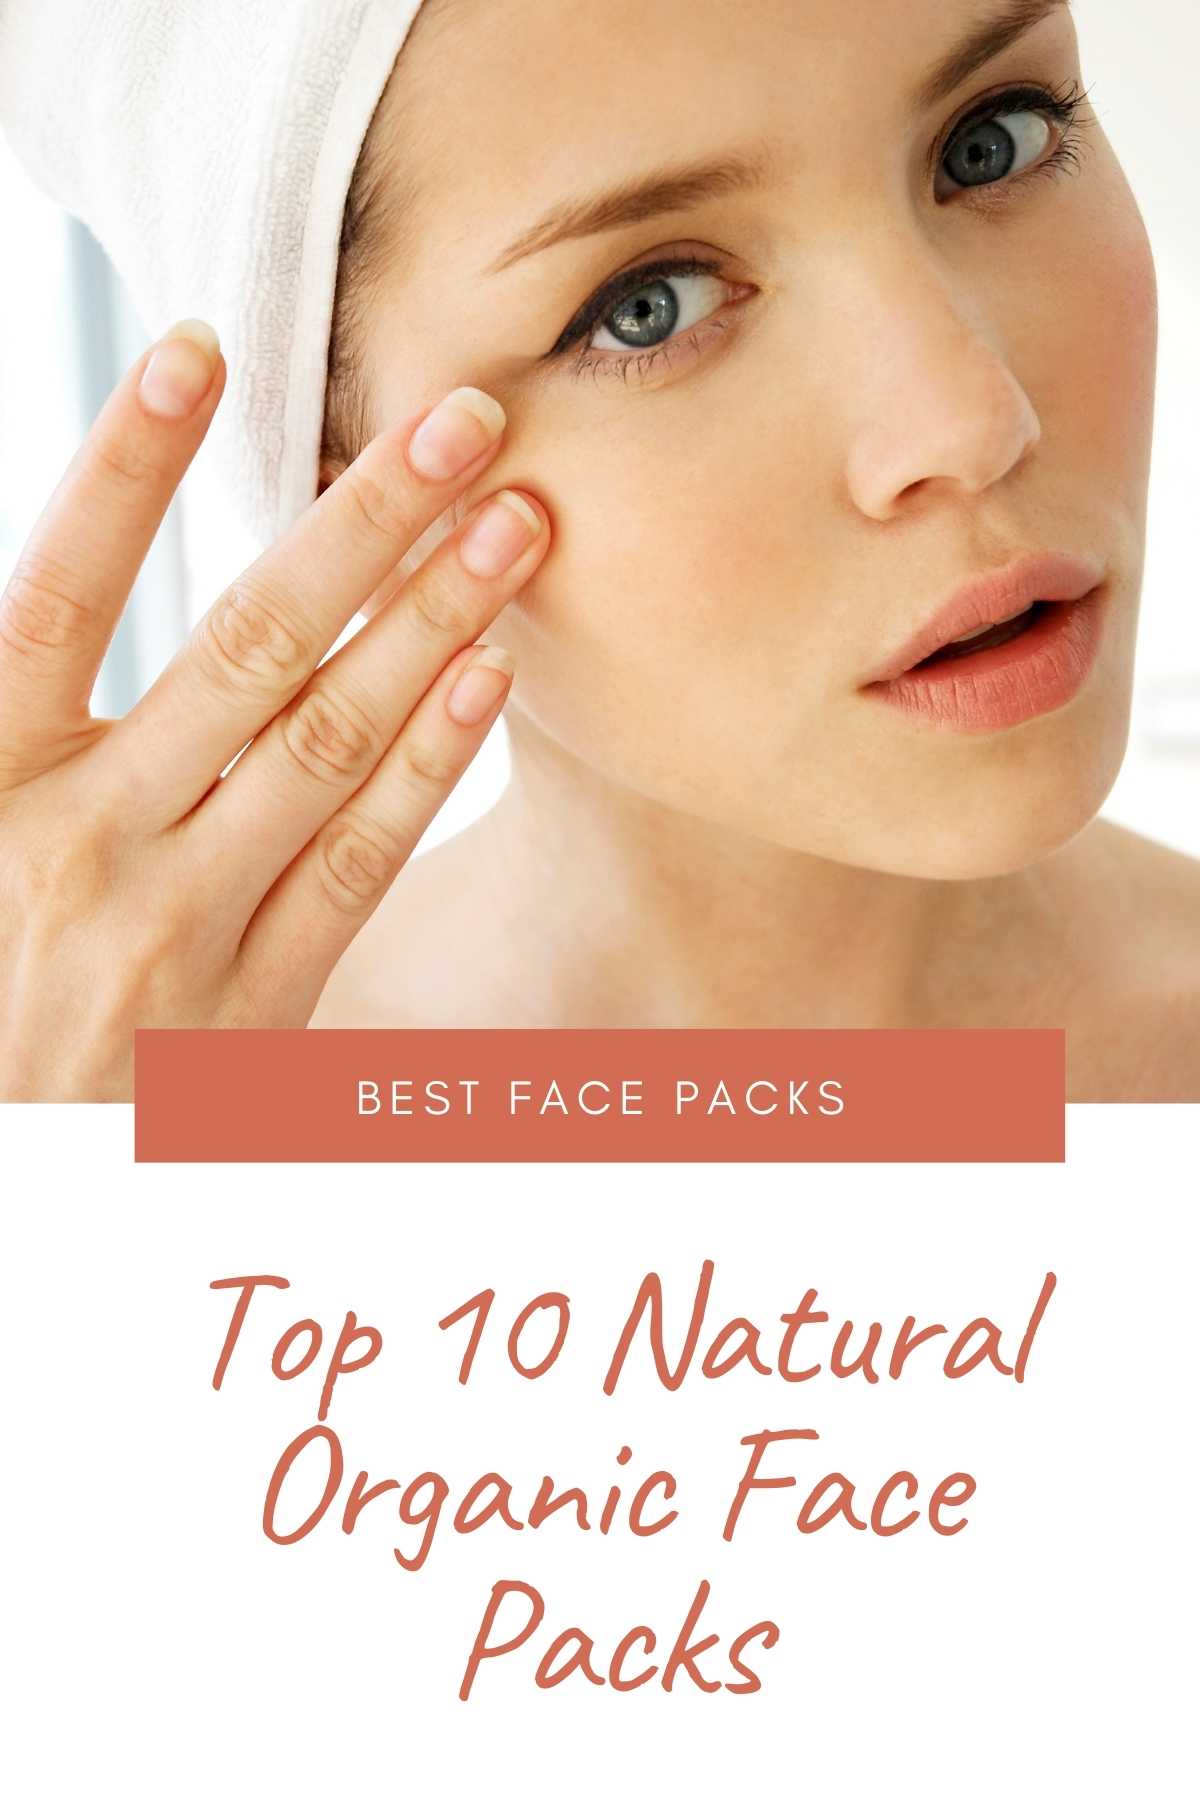 Top 10 Natural Organic Face Packs